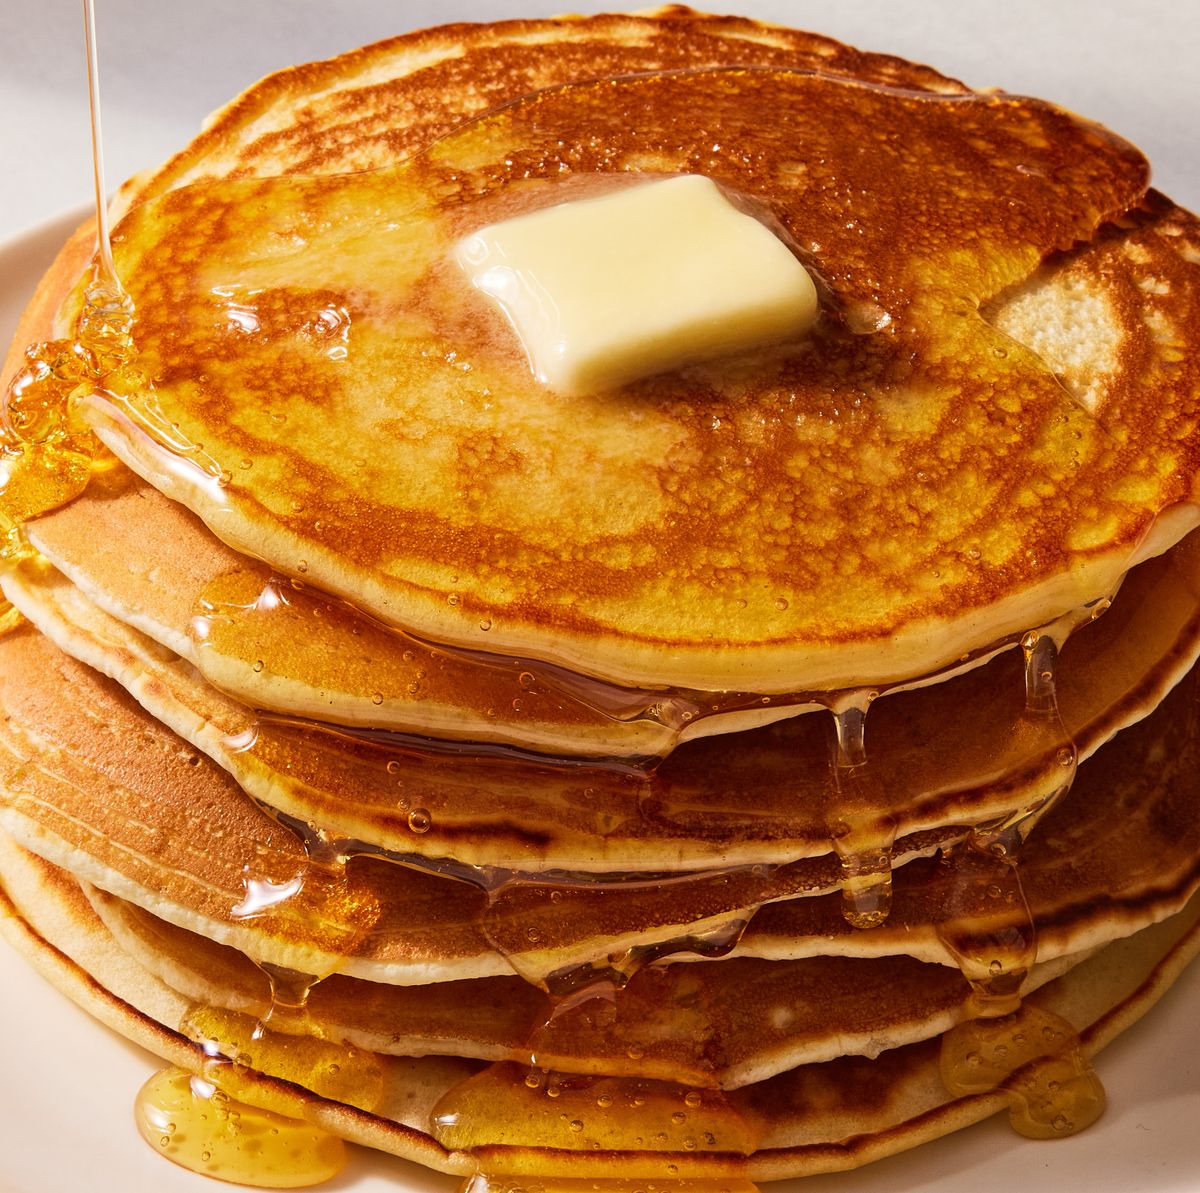 Best Homemade Pancakes Recipe - How To Make Perfect Pancakes